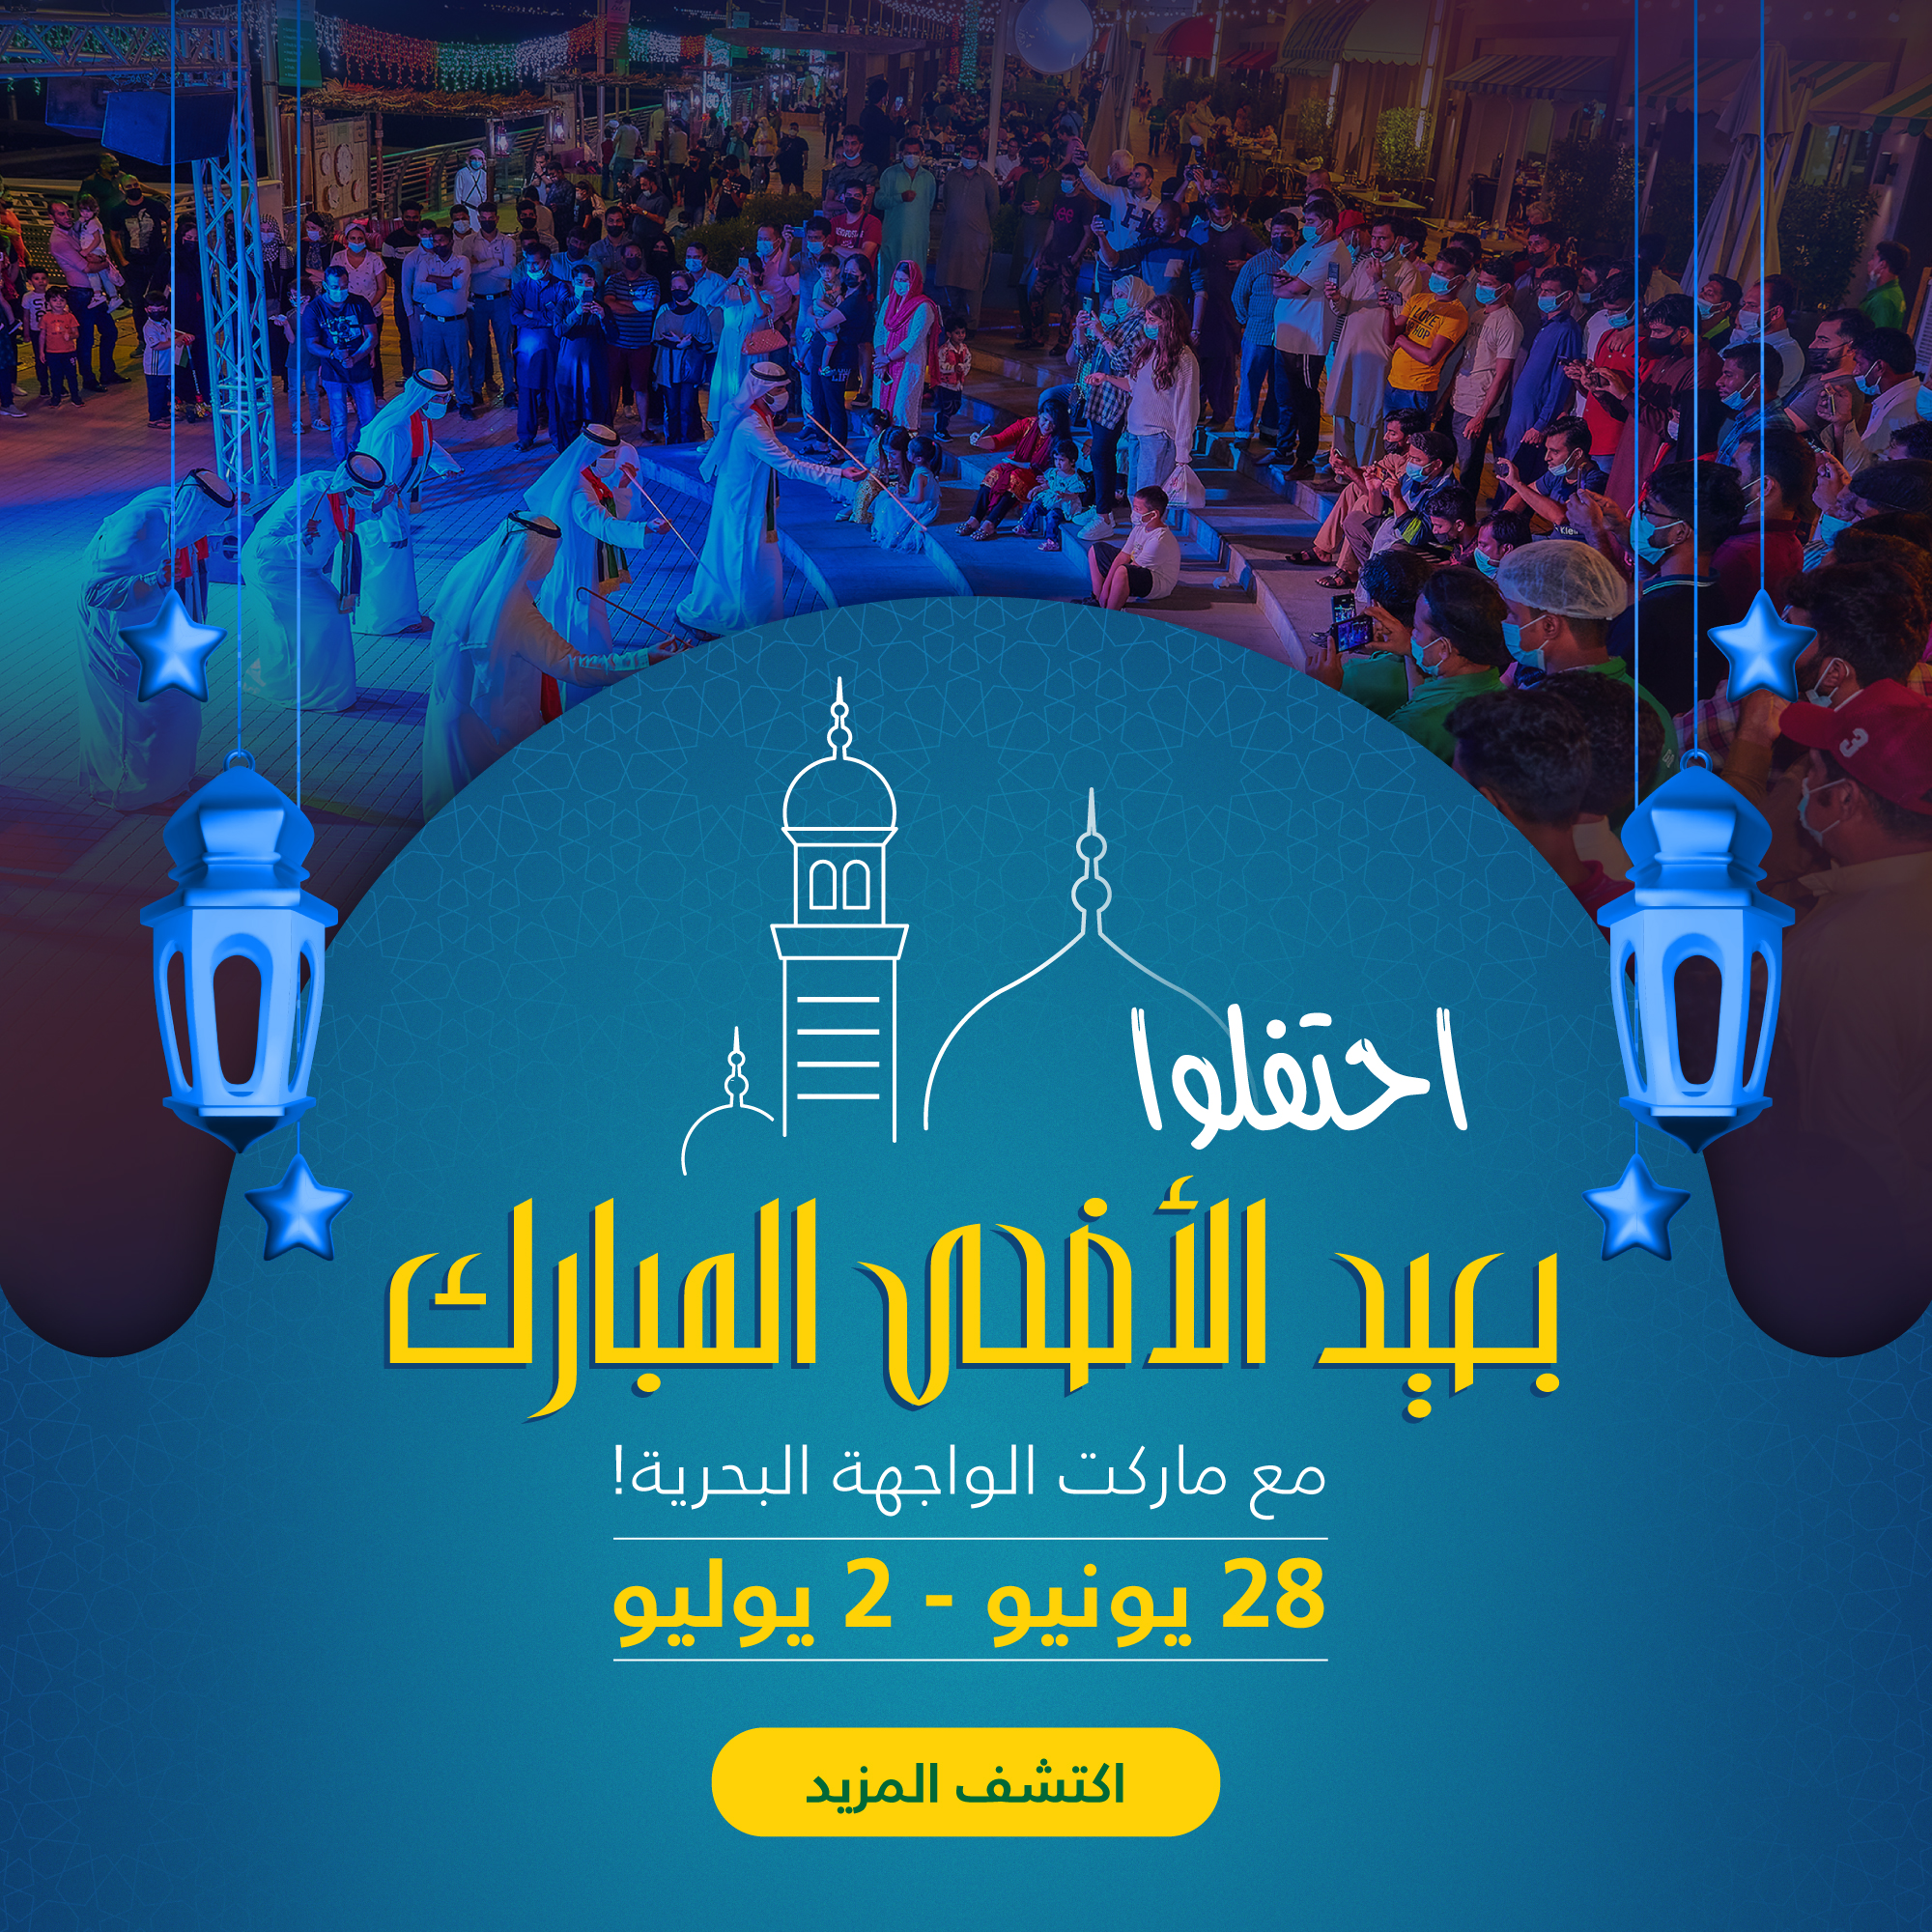 Celebrate Eid Al Adha With Waterfront Market